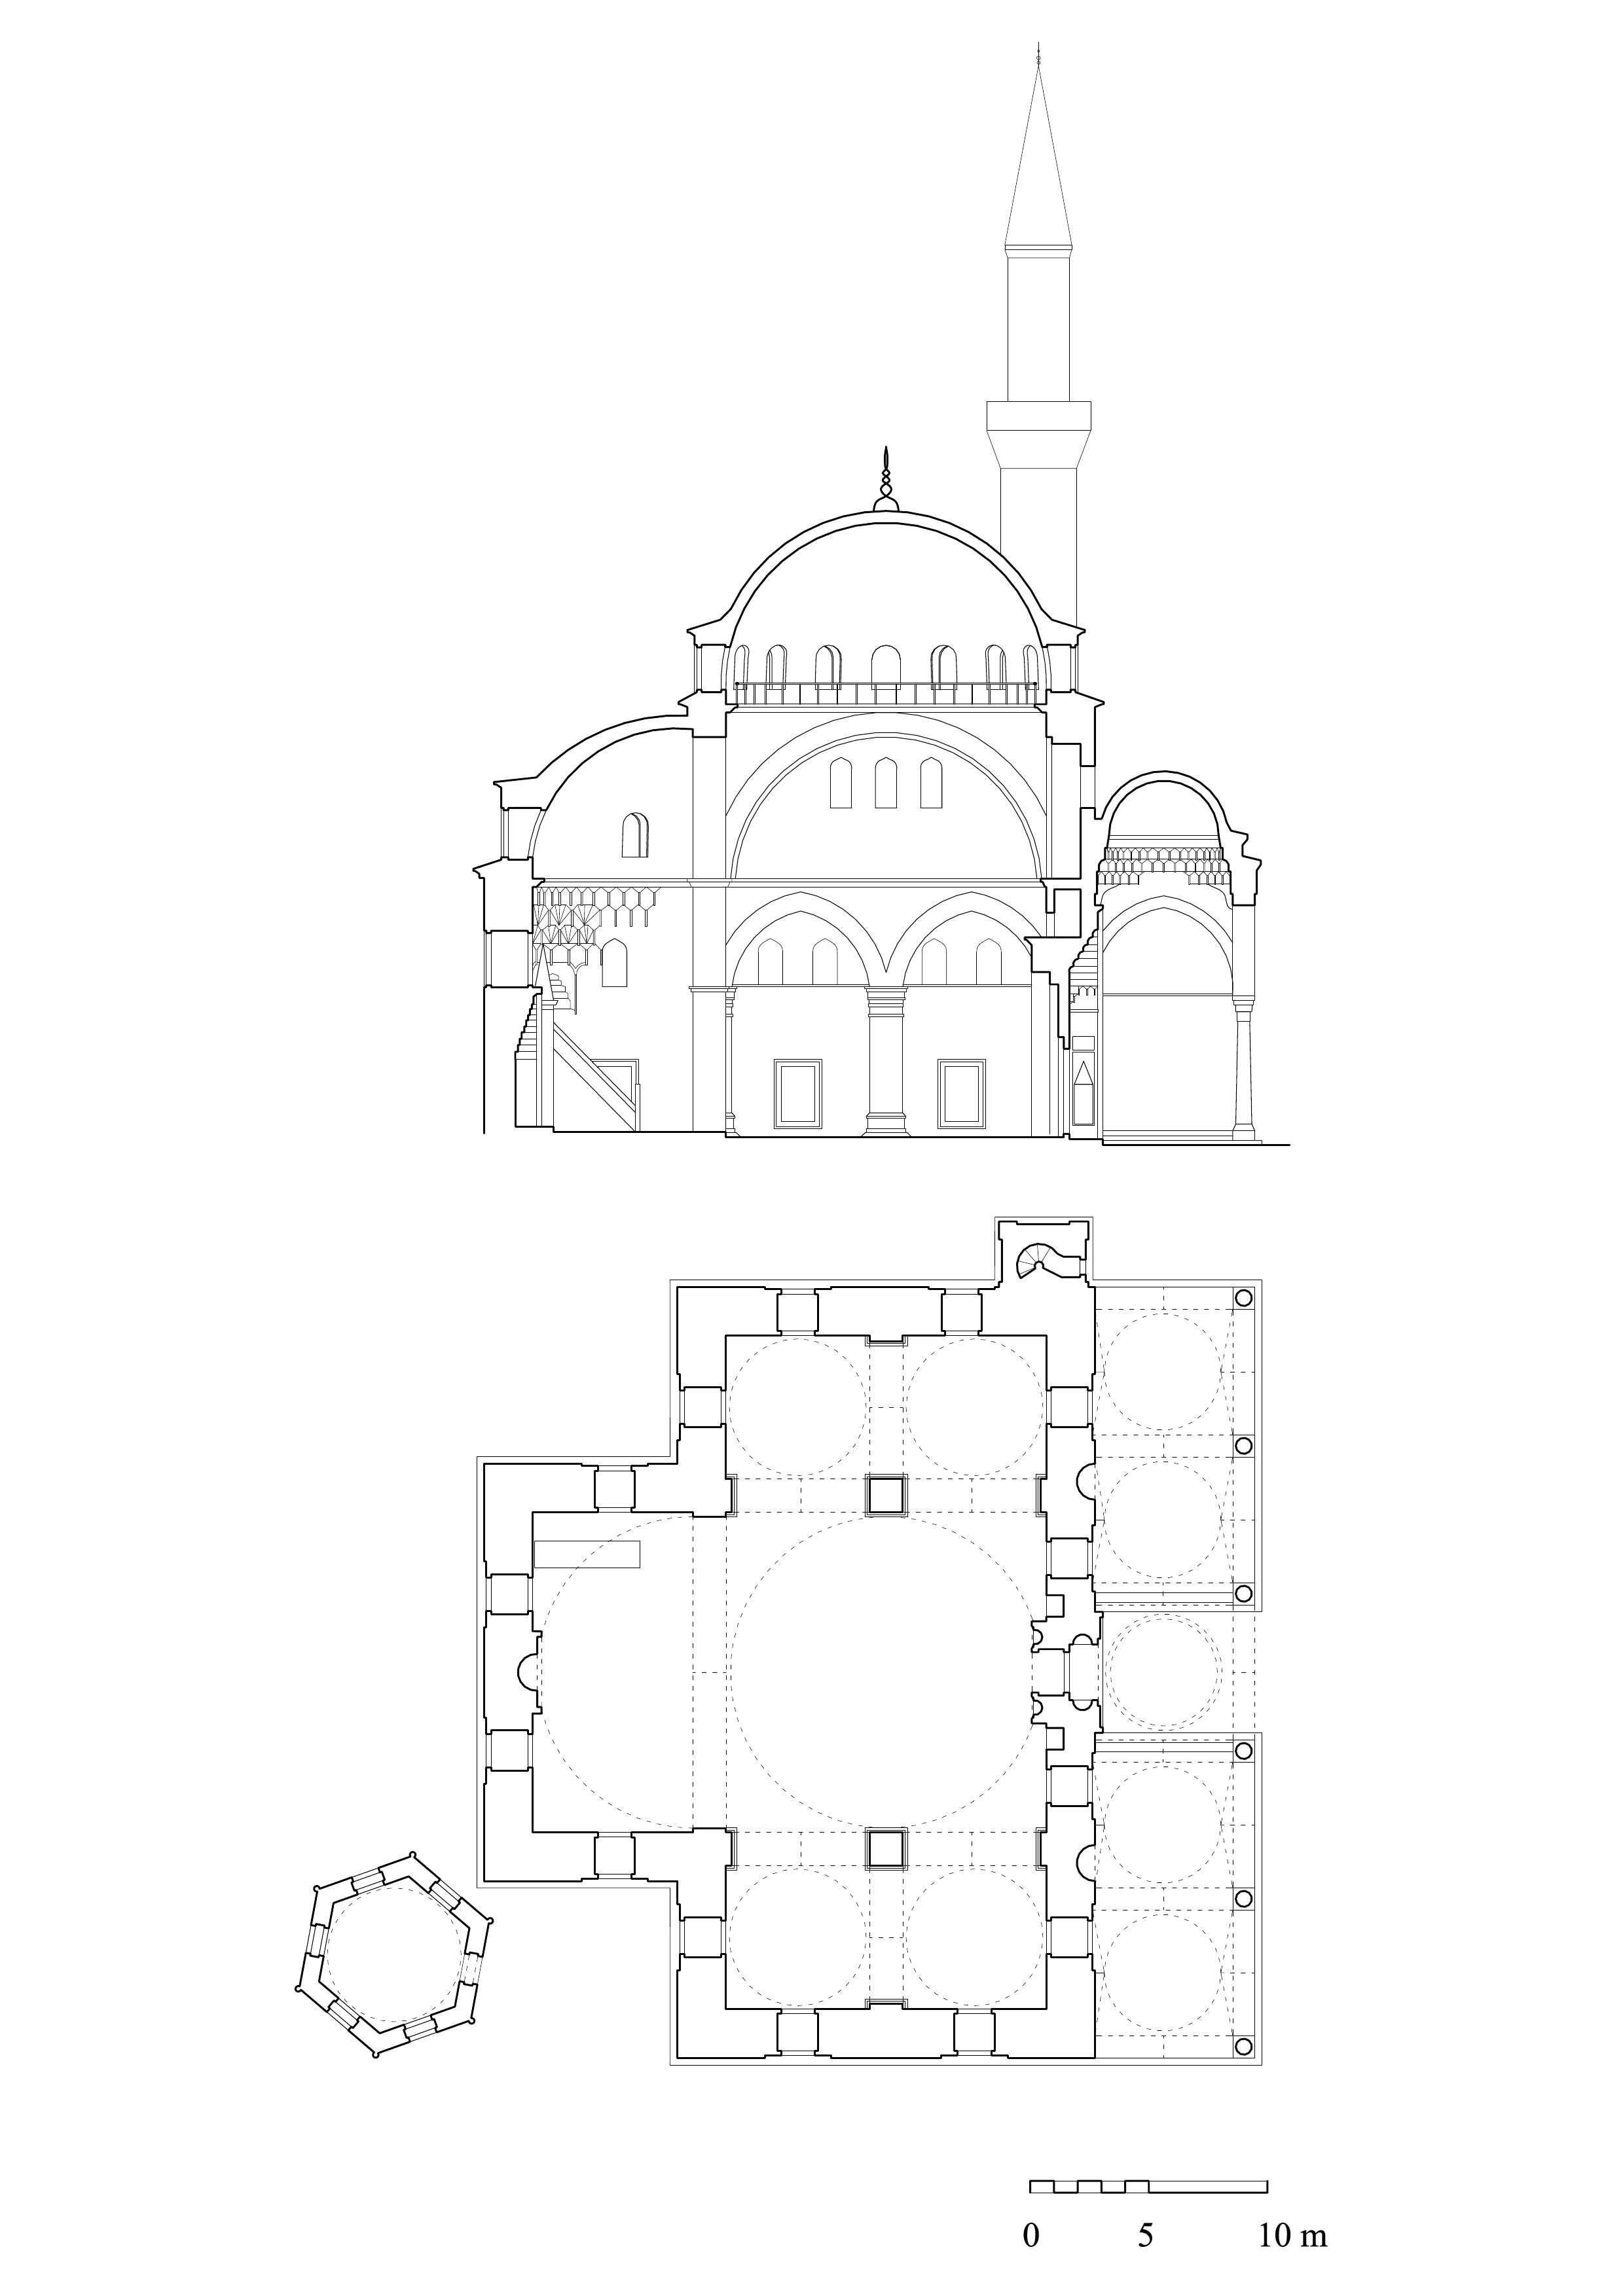 Floor plan of Atik Ali Pasa Mosque